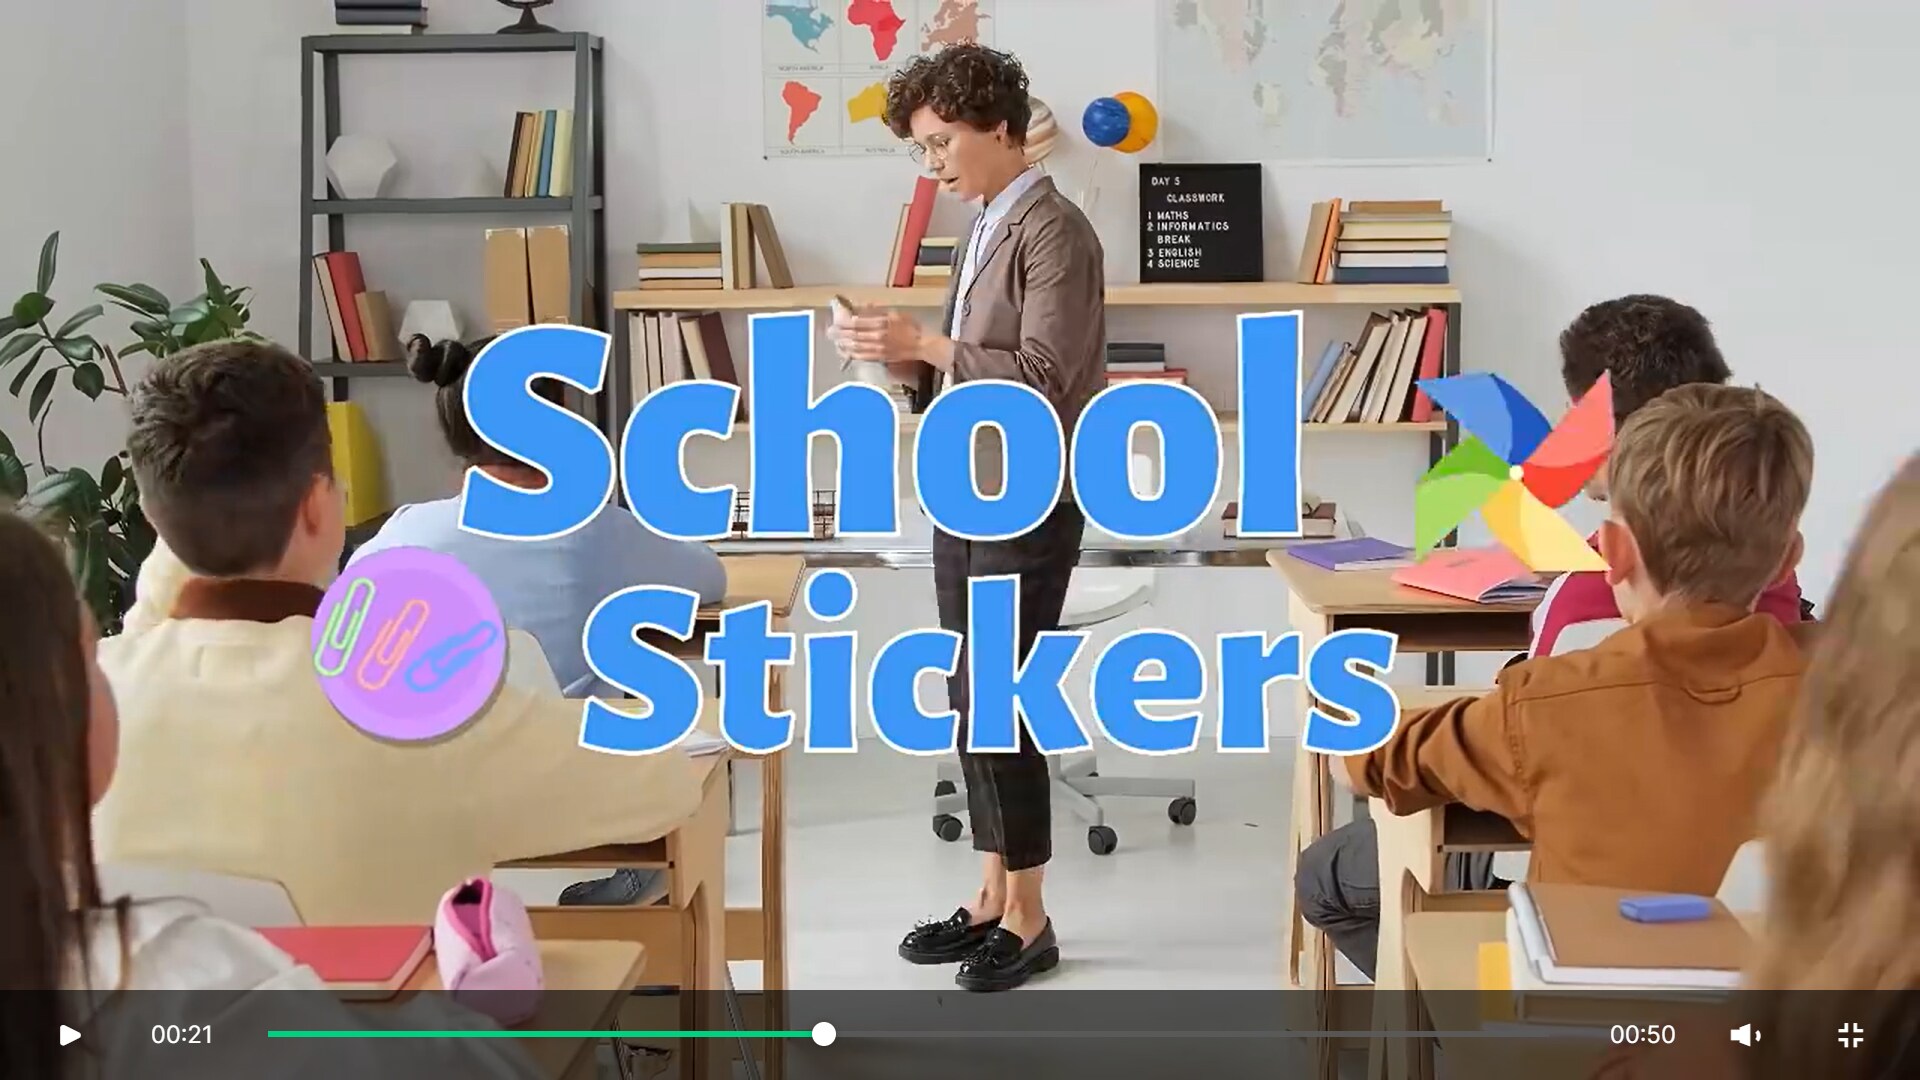 School stickers theme by wondershare filmora